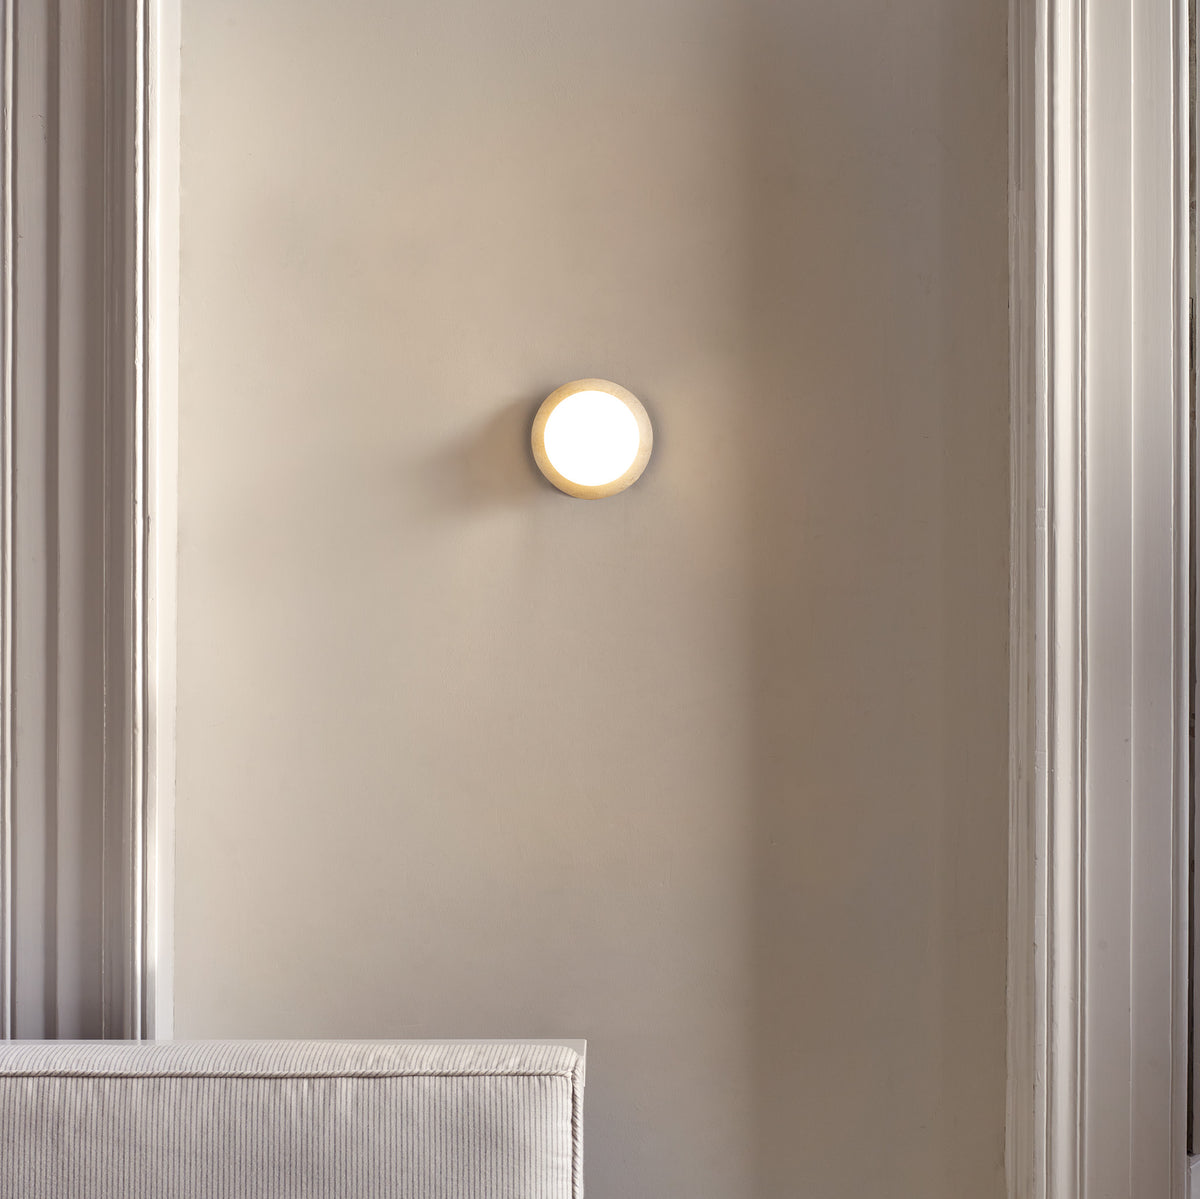 J Adams Orbit Wall Light, Travertine with White Opal Shade